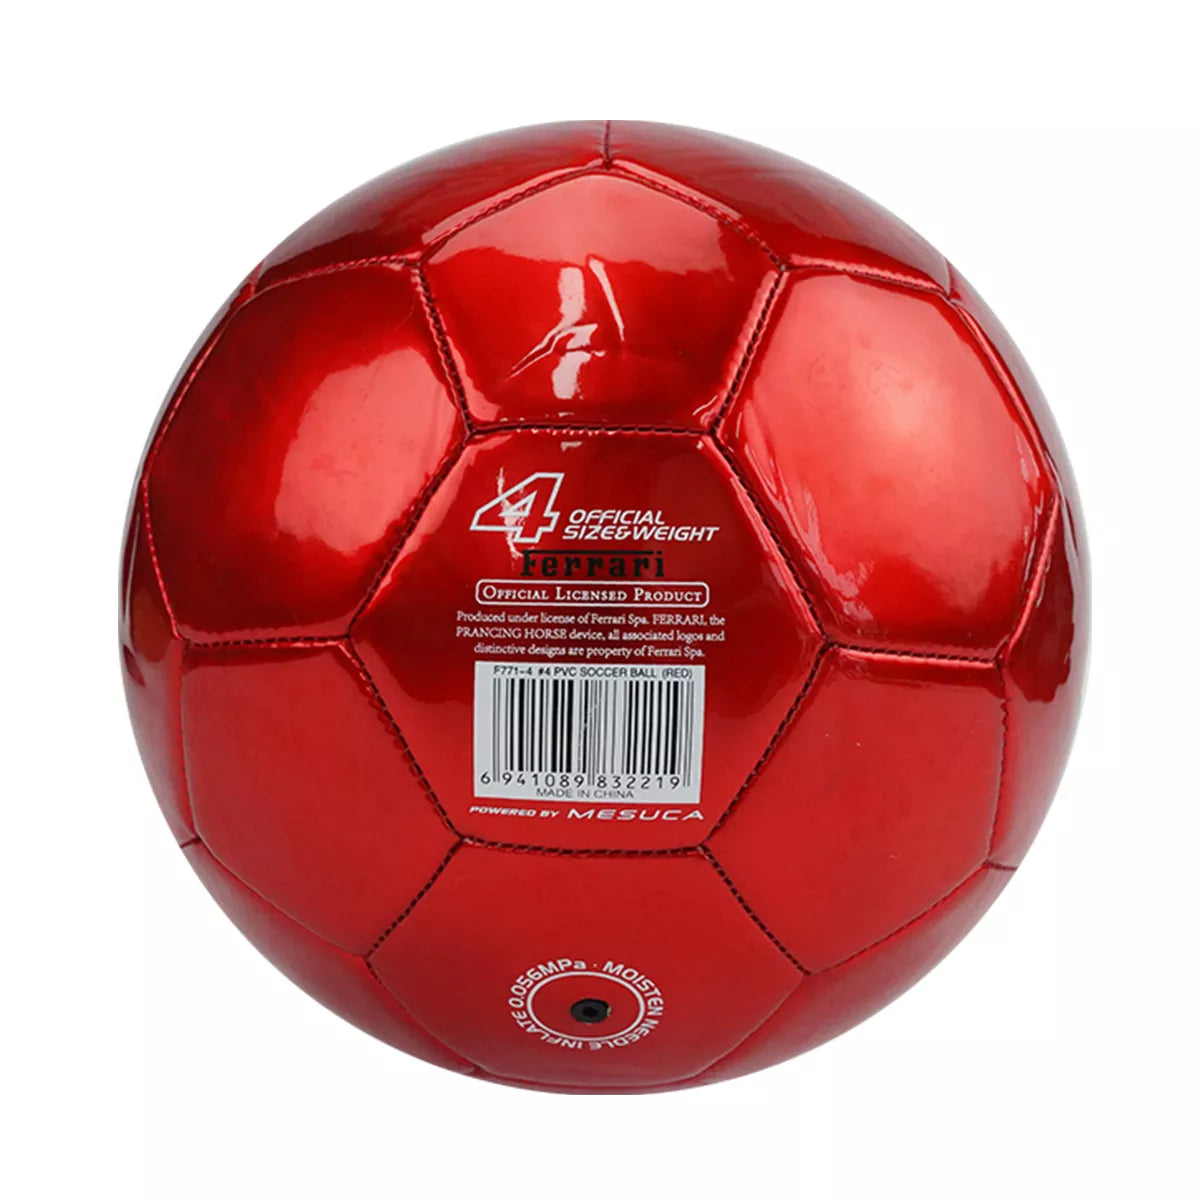 Ferrari - Metallic PVC Soccer Ball - Size 2 (Red)